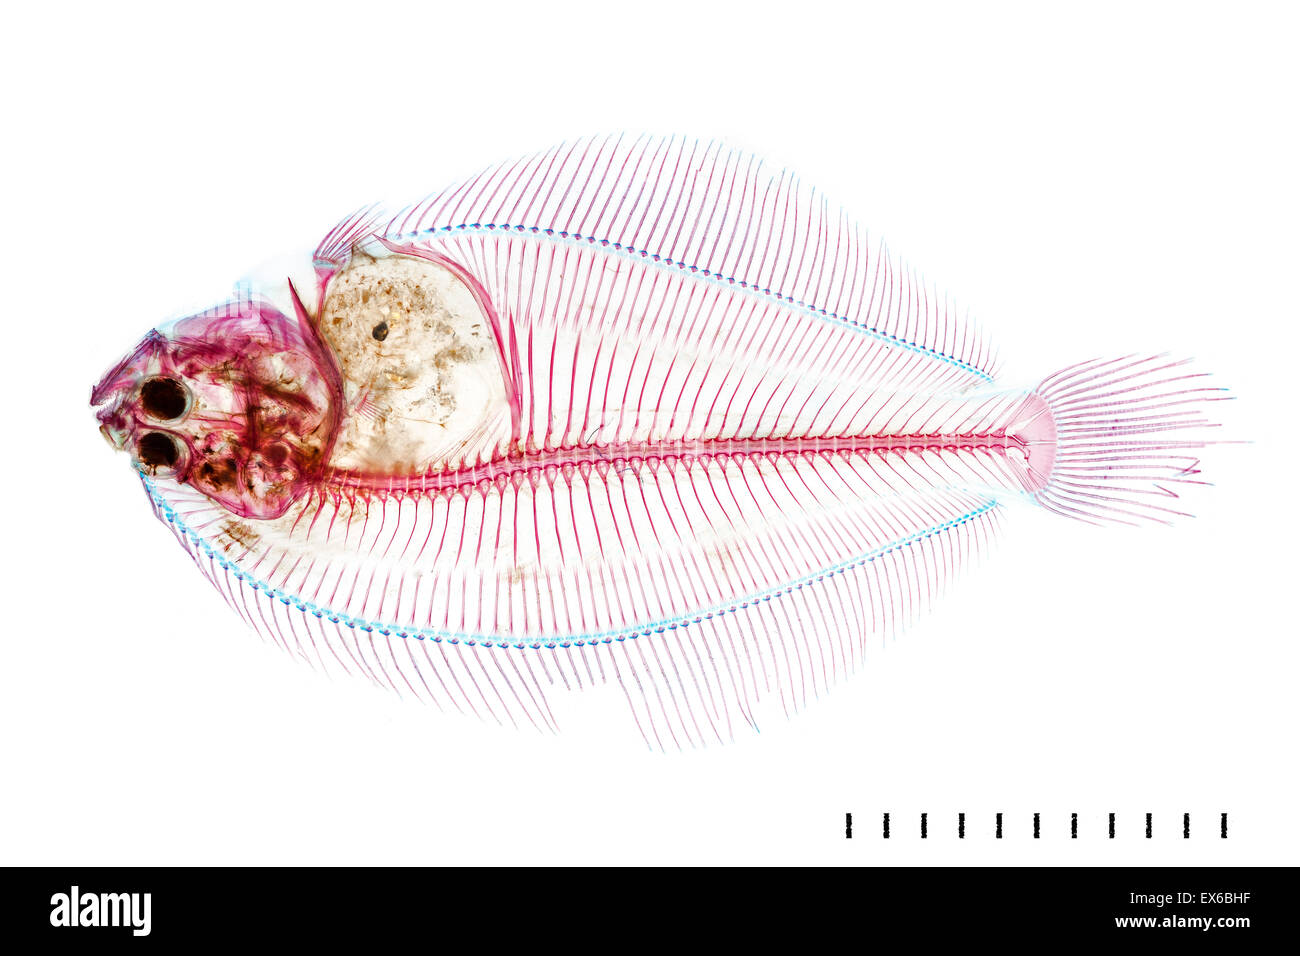 Juvenile Pleuronectid flatfish Stock Photo